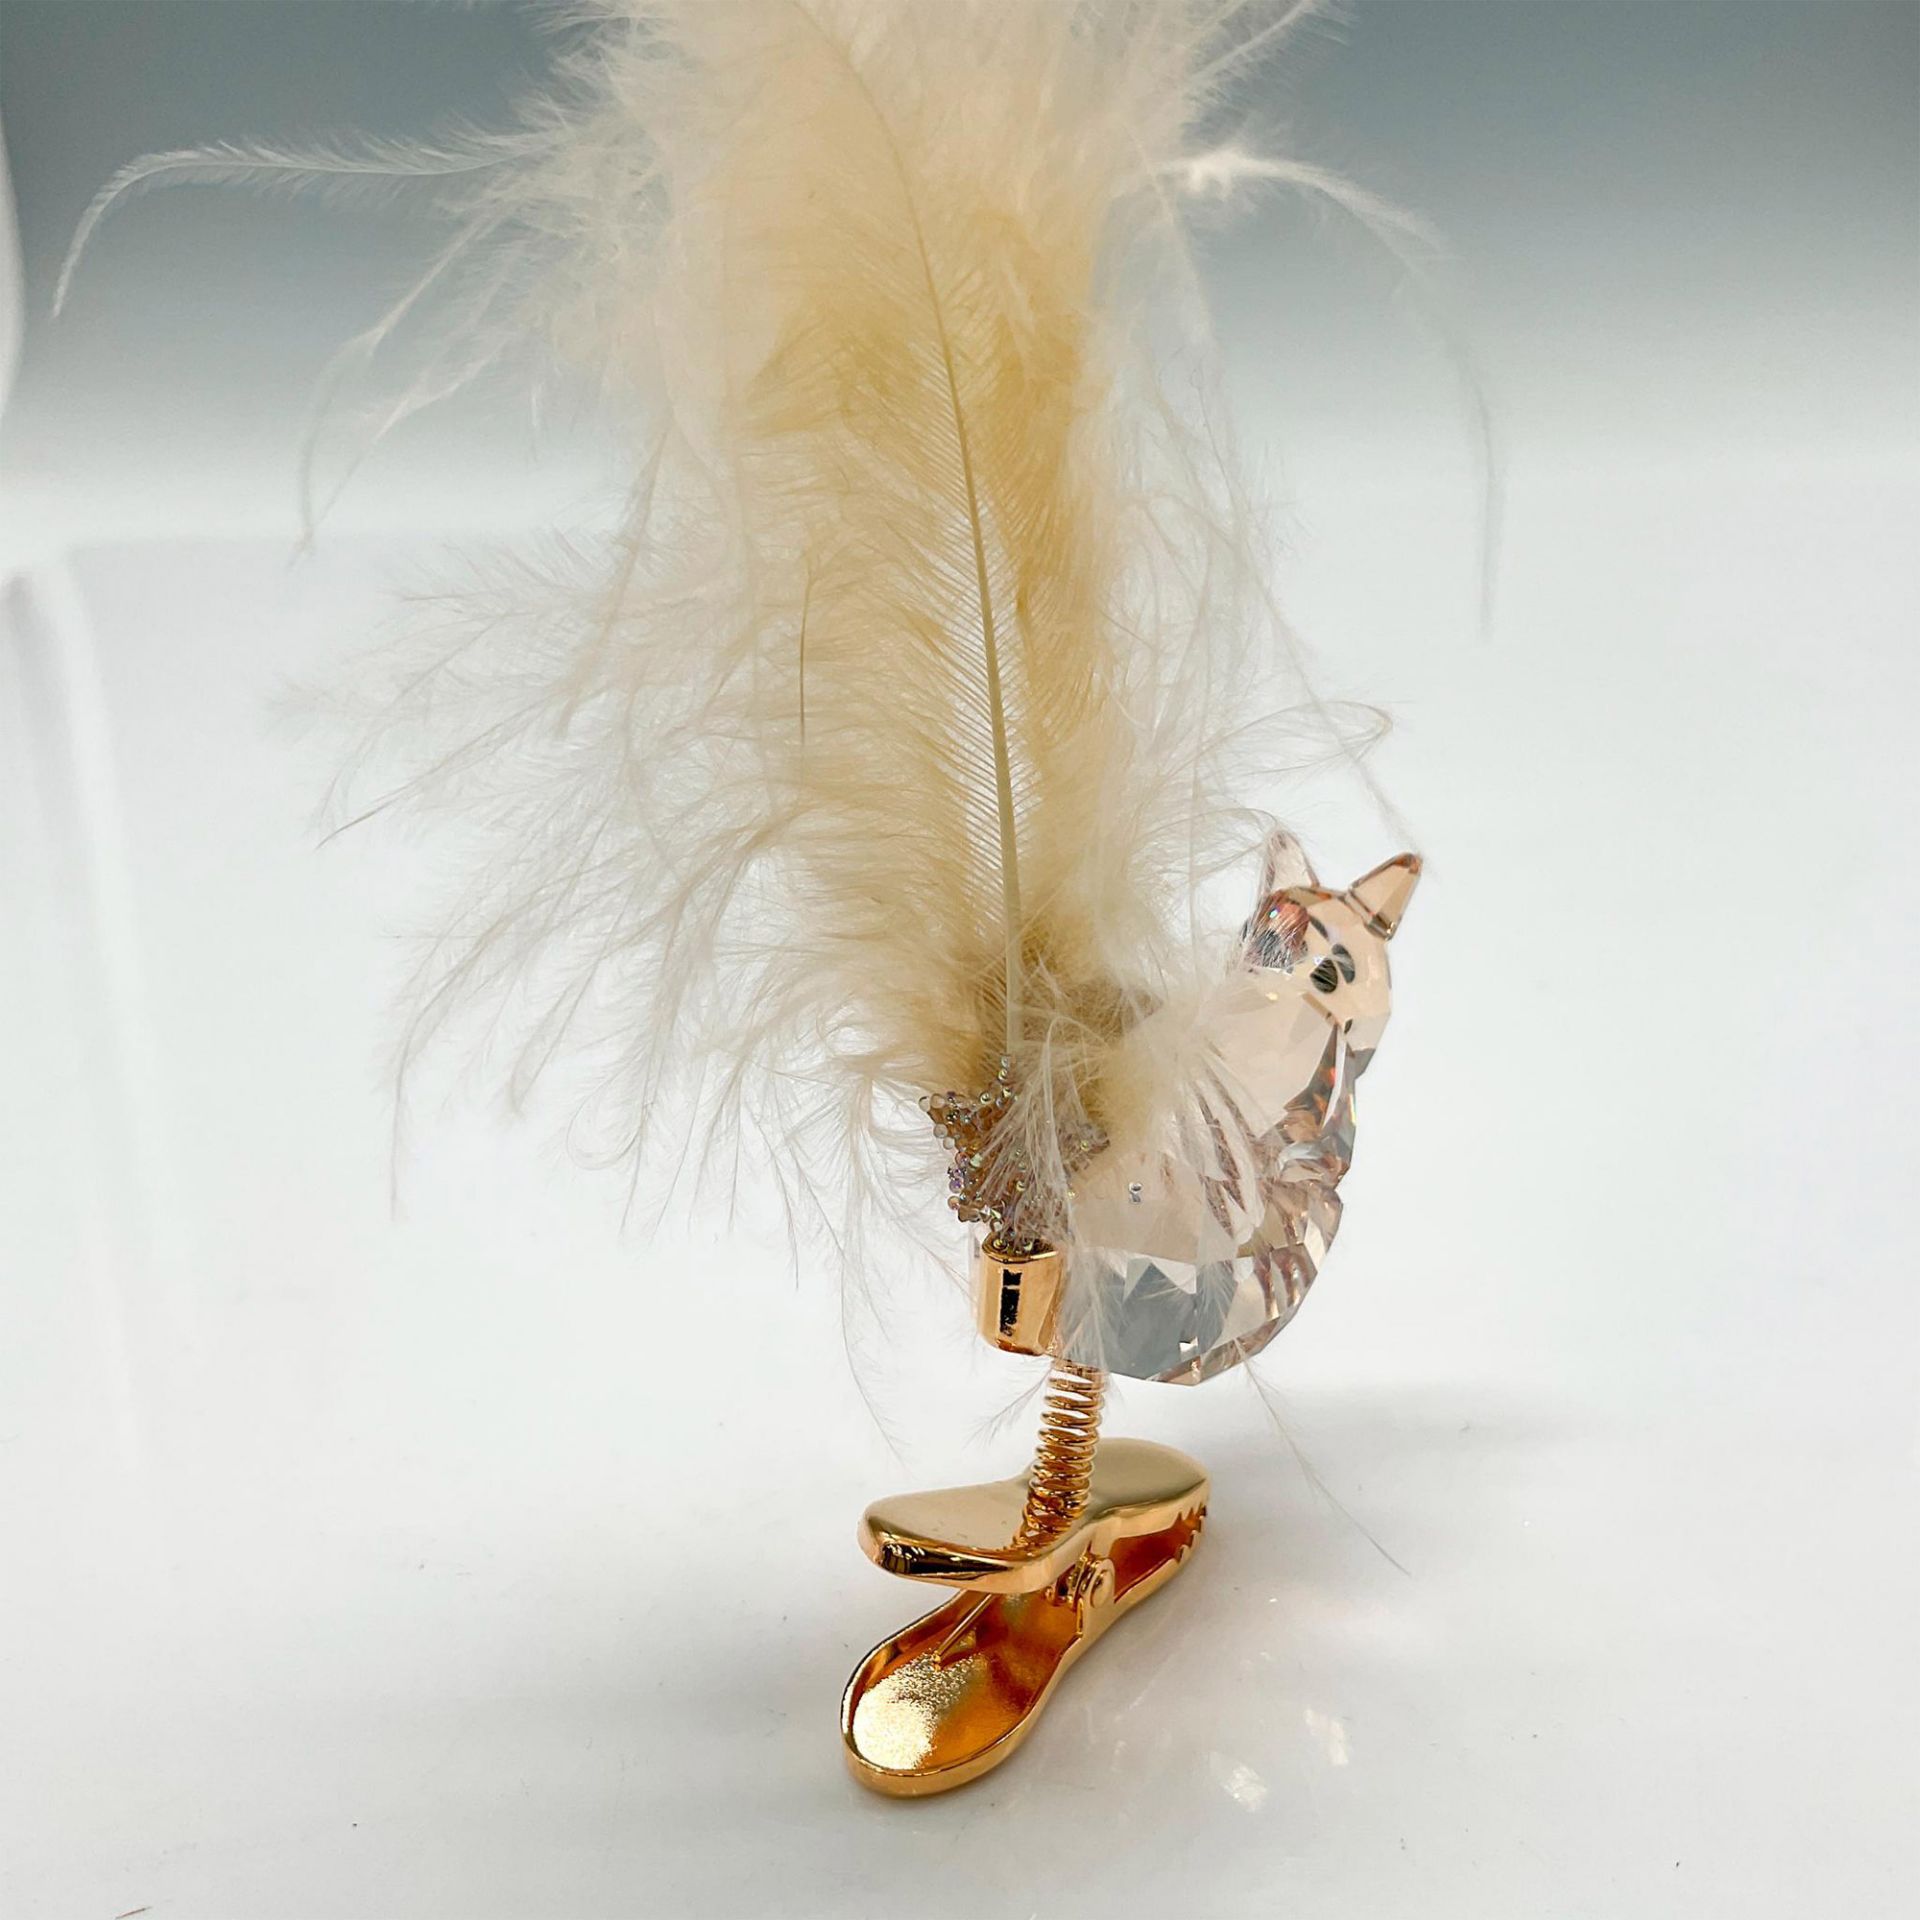 Swarovski Crystal Ornament, Winter Squirrel - Image 2 of 4